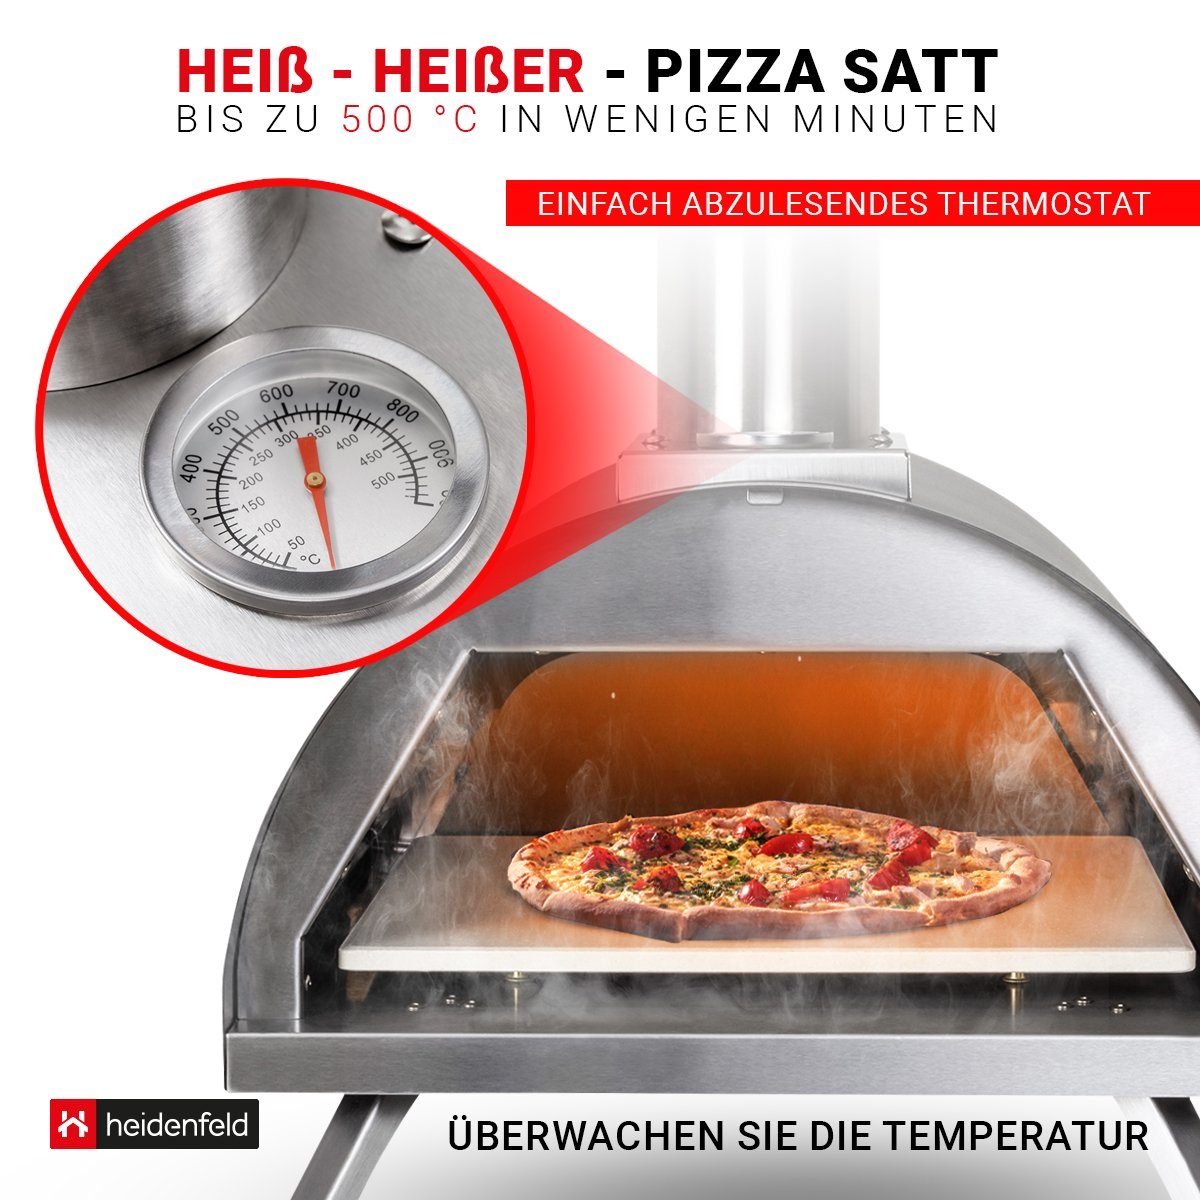 inkl. - 2in1 oder Pizzastein Sichtfenster Hybrid Ofen - Backofen - Edelstahl Heidenfeld Pizzaofen 500°C, Gasgril Pellets Holzofen Neapel Pizza - bis